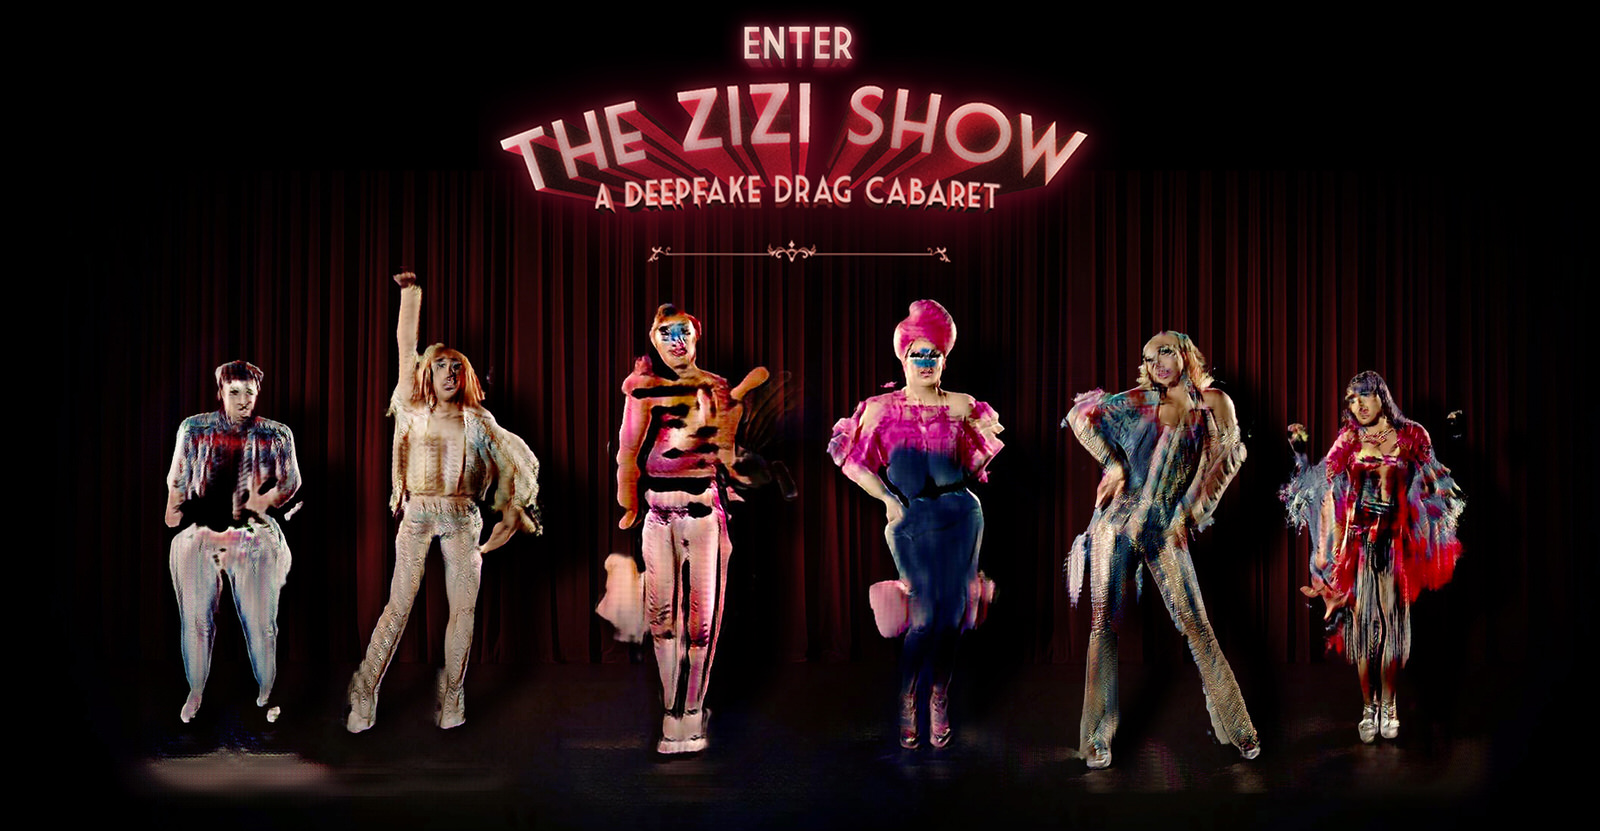 The Zizi Show 2020 - Jake Elwes digital artist